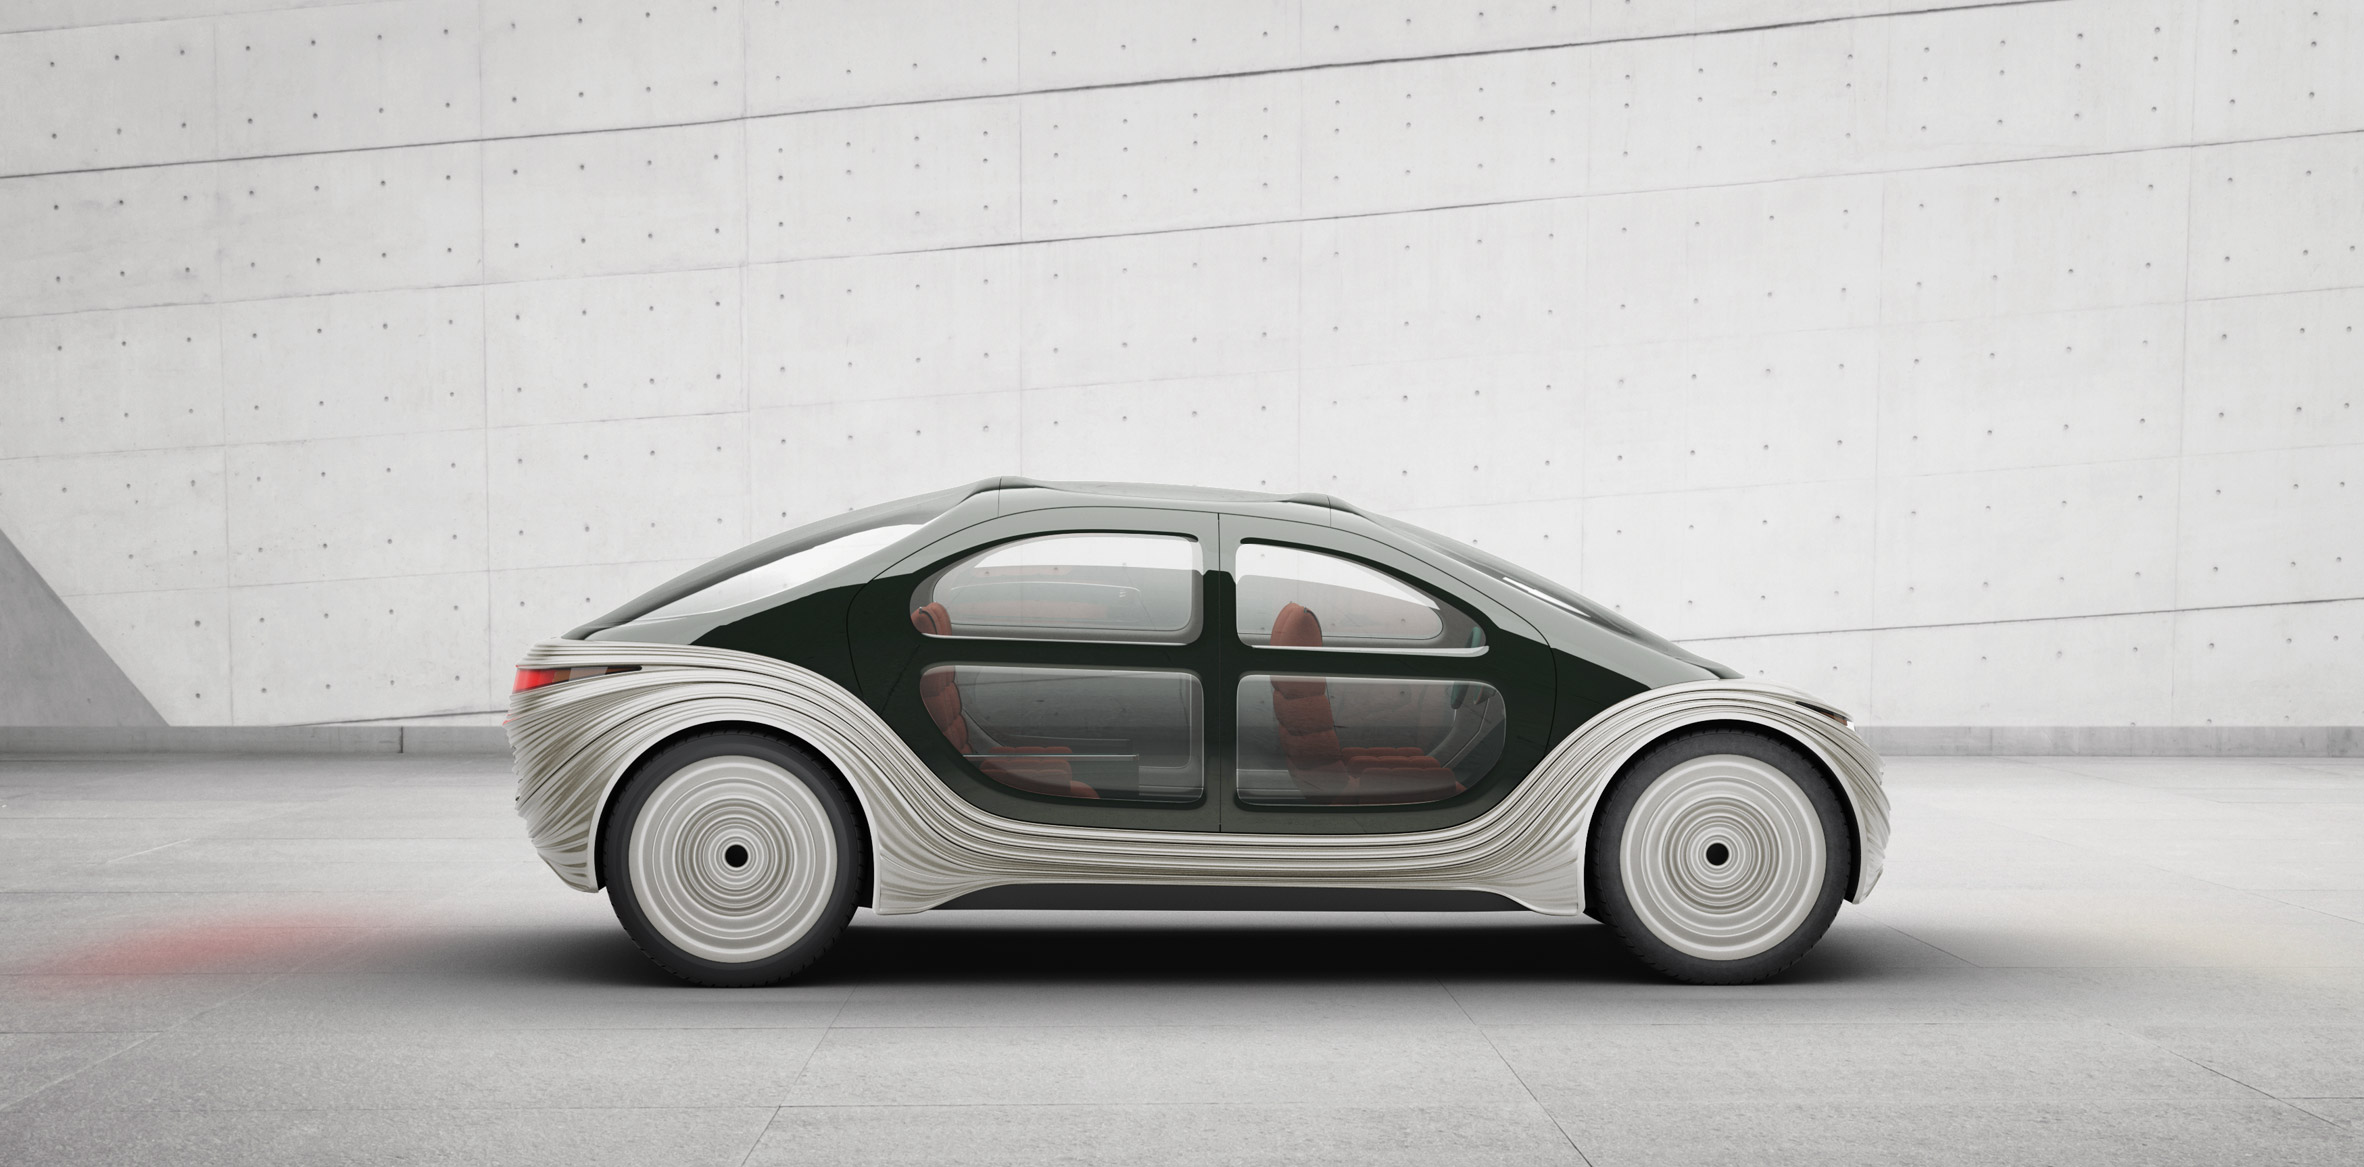 Airo electric car designed by Heatherwick Studio